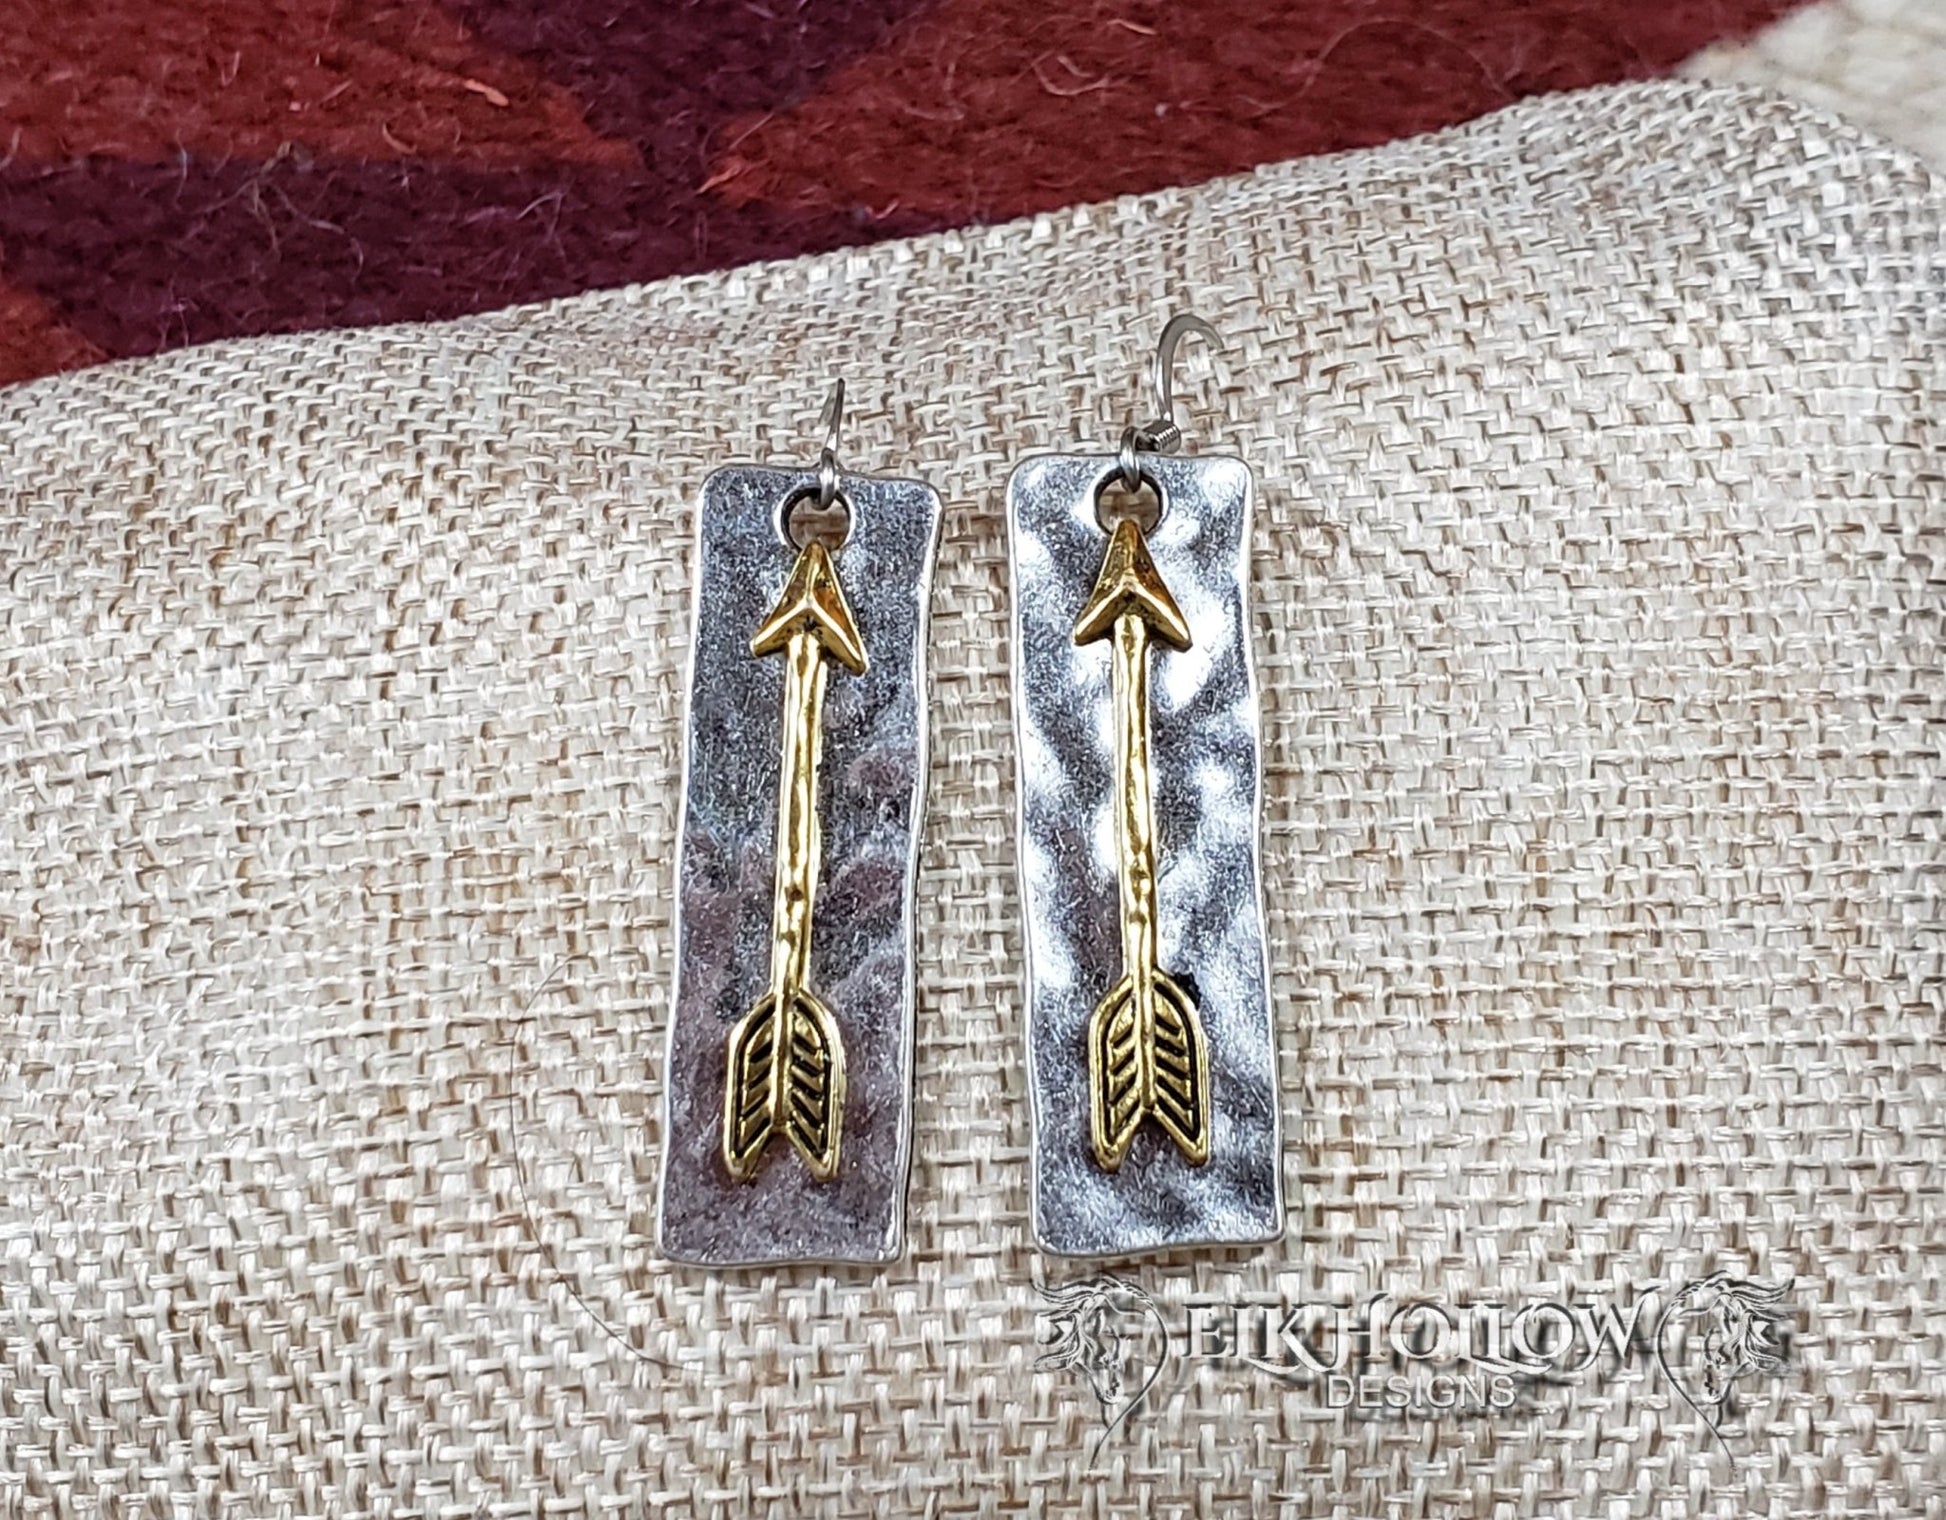 Silver and Gold Arrow Earrings - Elk Hollow DesignsSilver and Gold Arrow Earrings